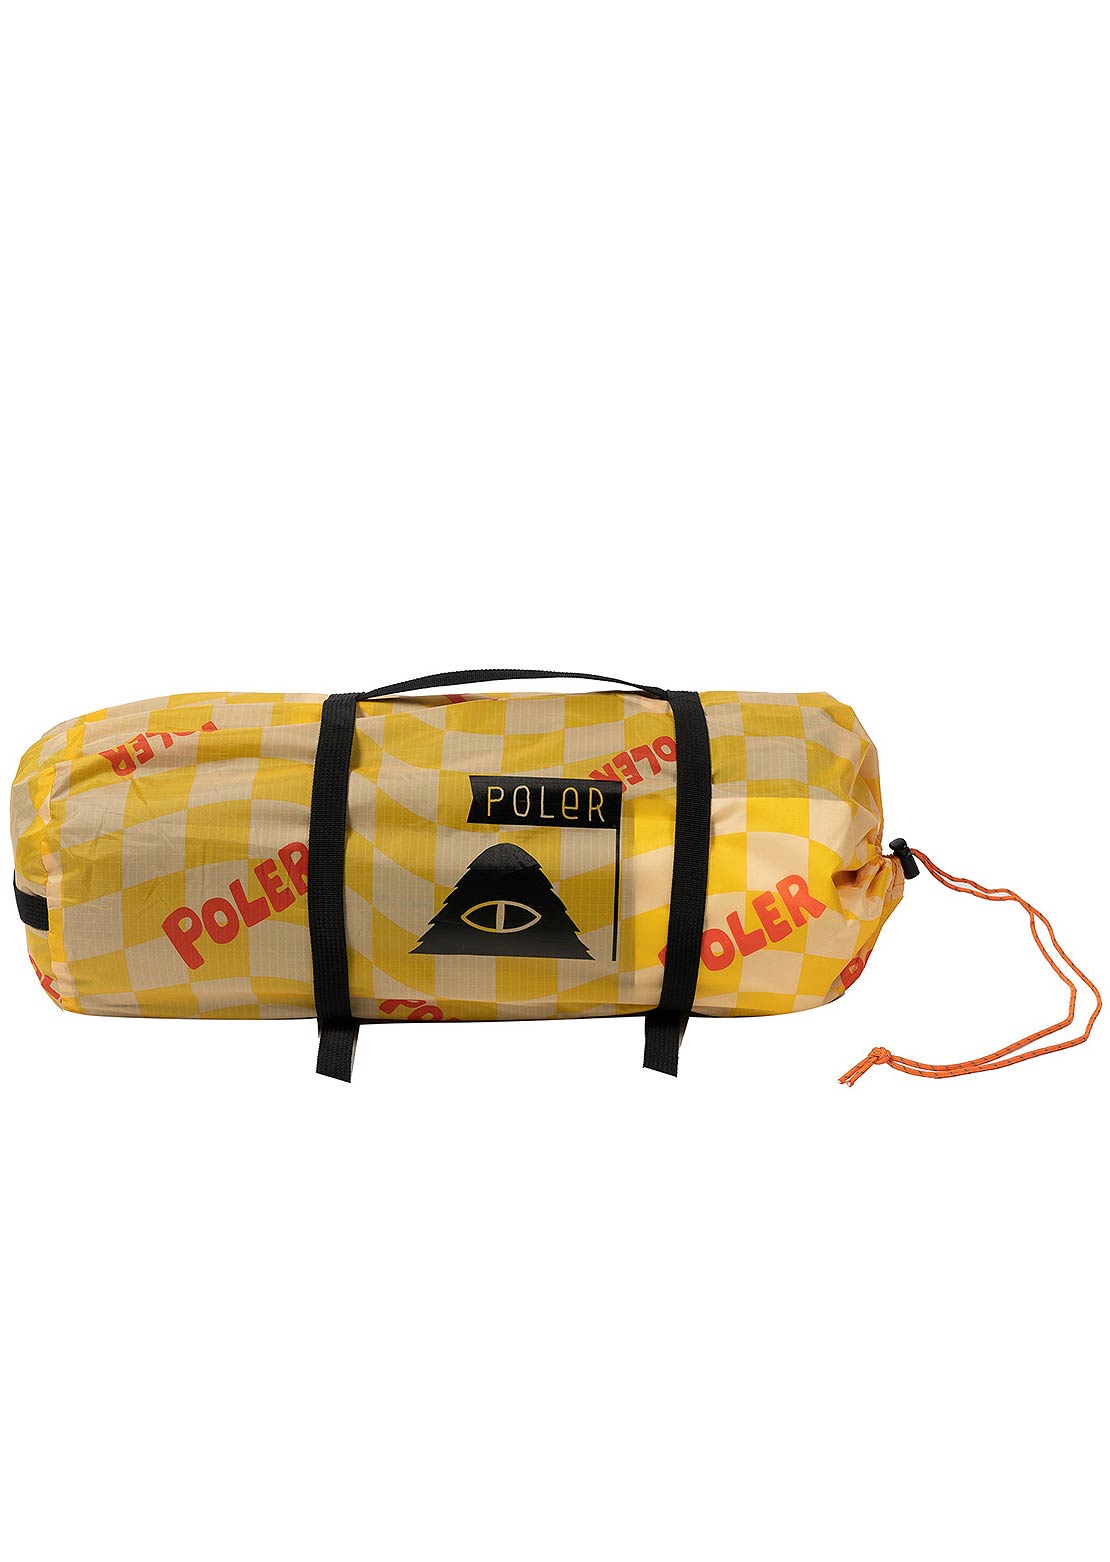 Poler 2 Person Tent Wavy Check Yellow